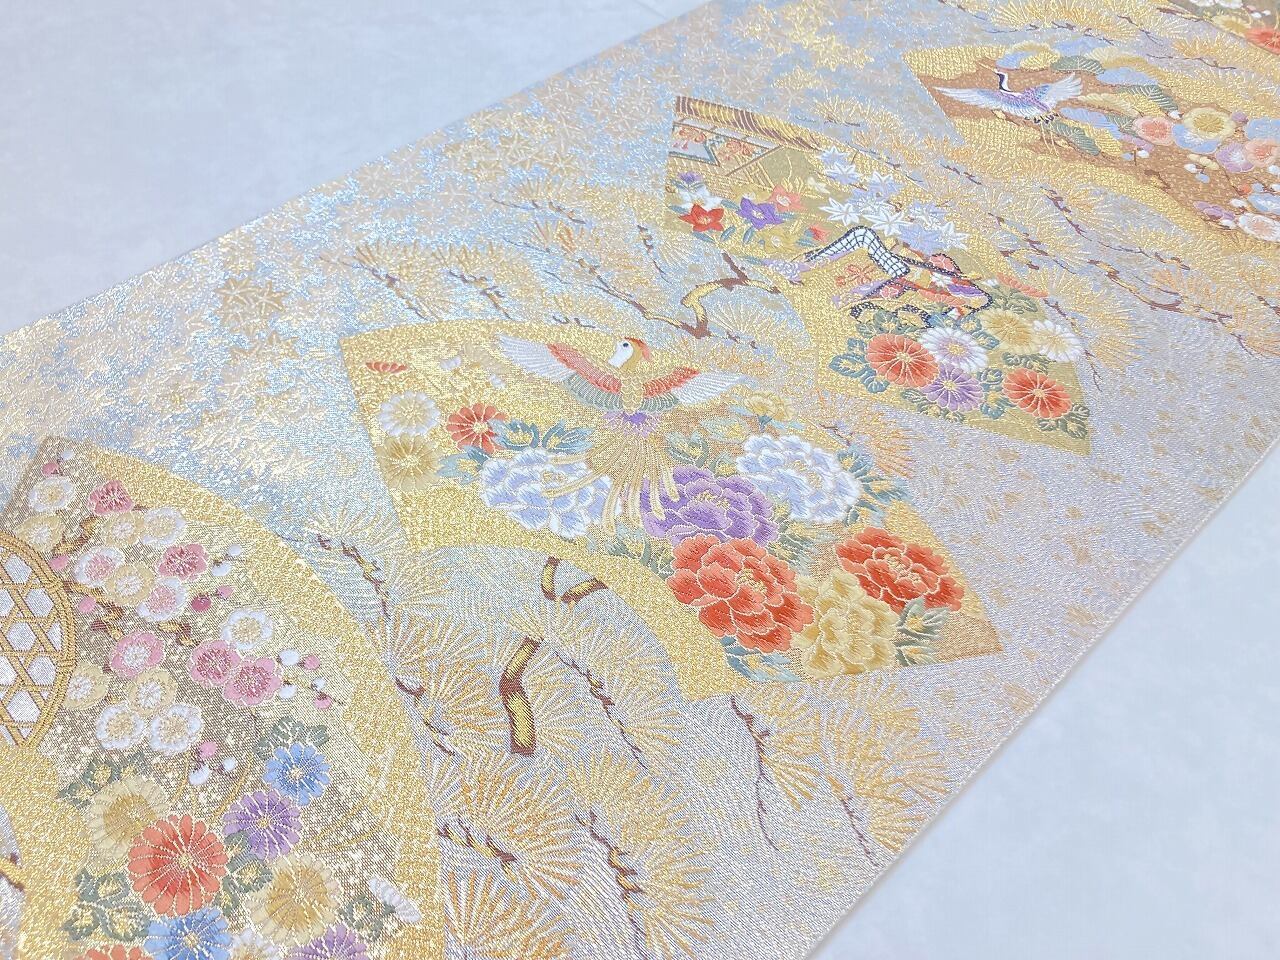 唐織り 松寿扇面文 四季の花々 袋帯 金糸 正絹 シルバー 赤 紫 509